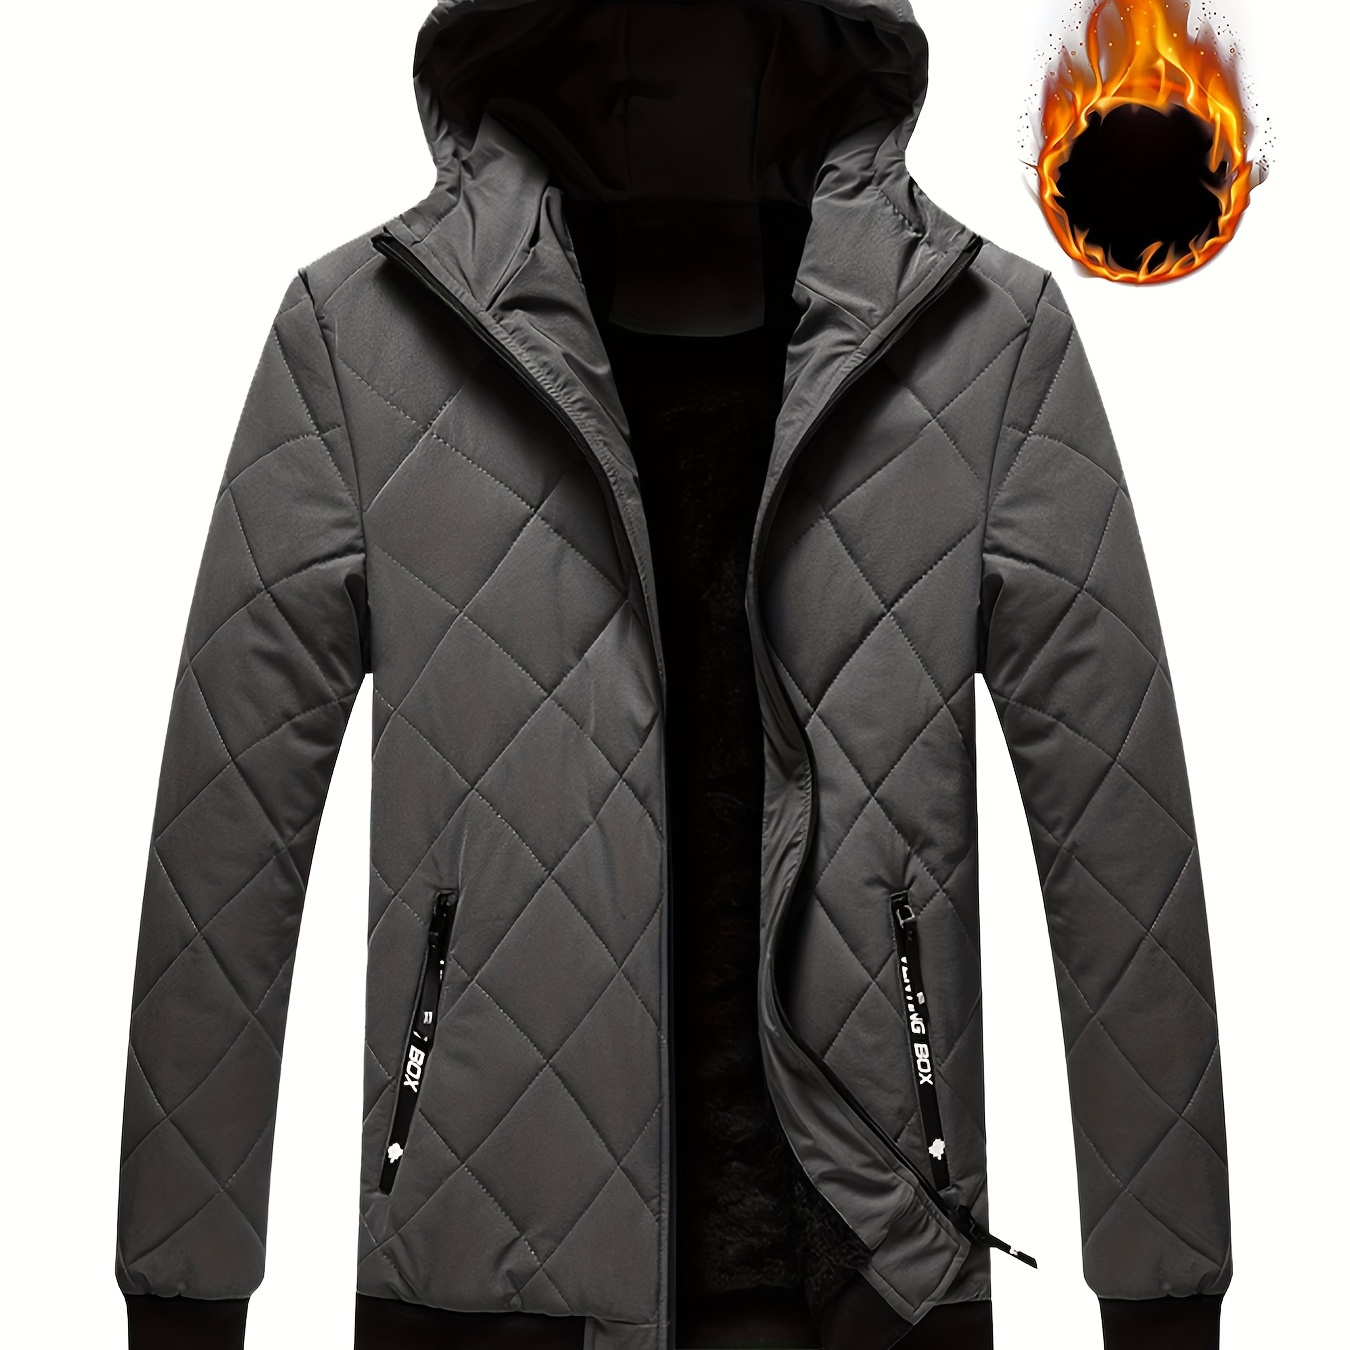 

Warm Fleece Men's Hooded Windbreaker, Full Zip Up Long Sleeve Jacket With Zipper Pockets For Winter Outdoor Leisure